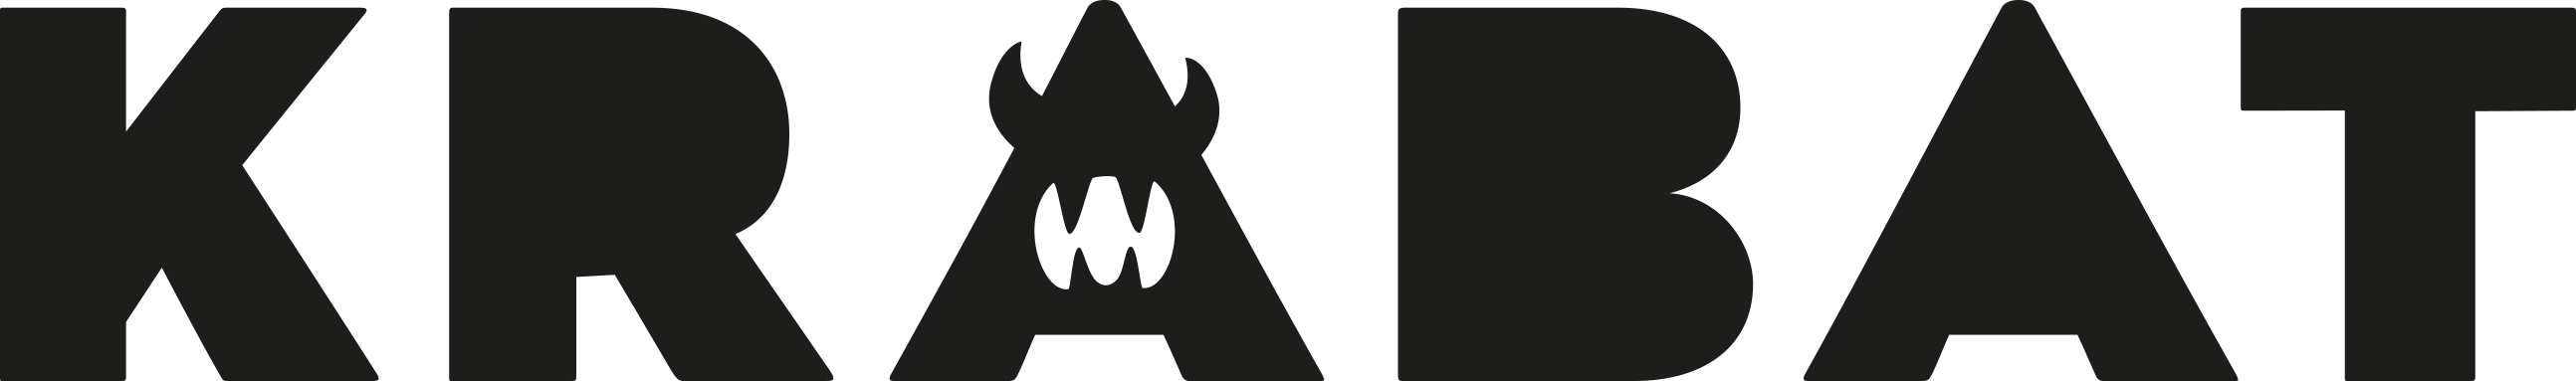 Krabat logo